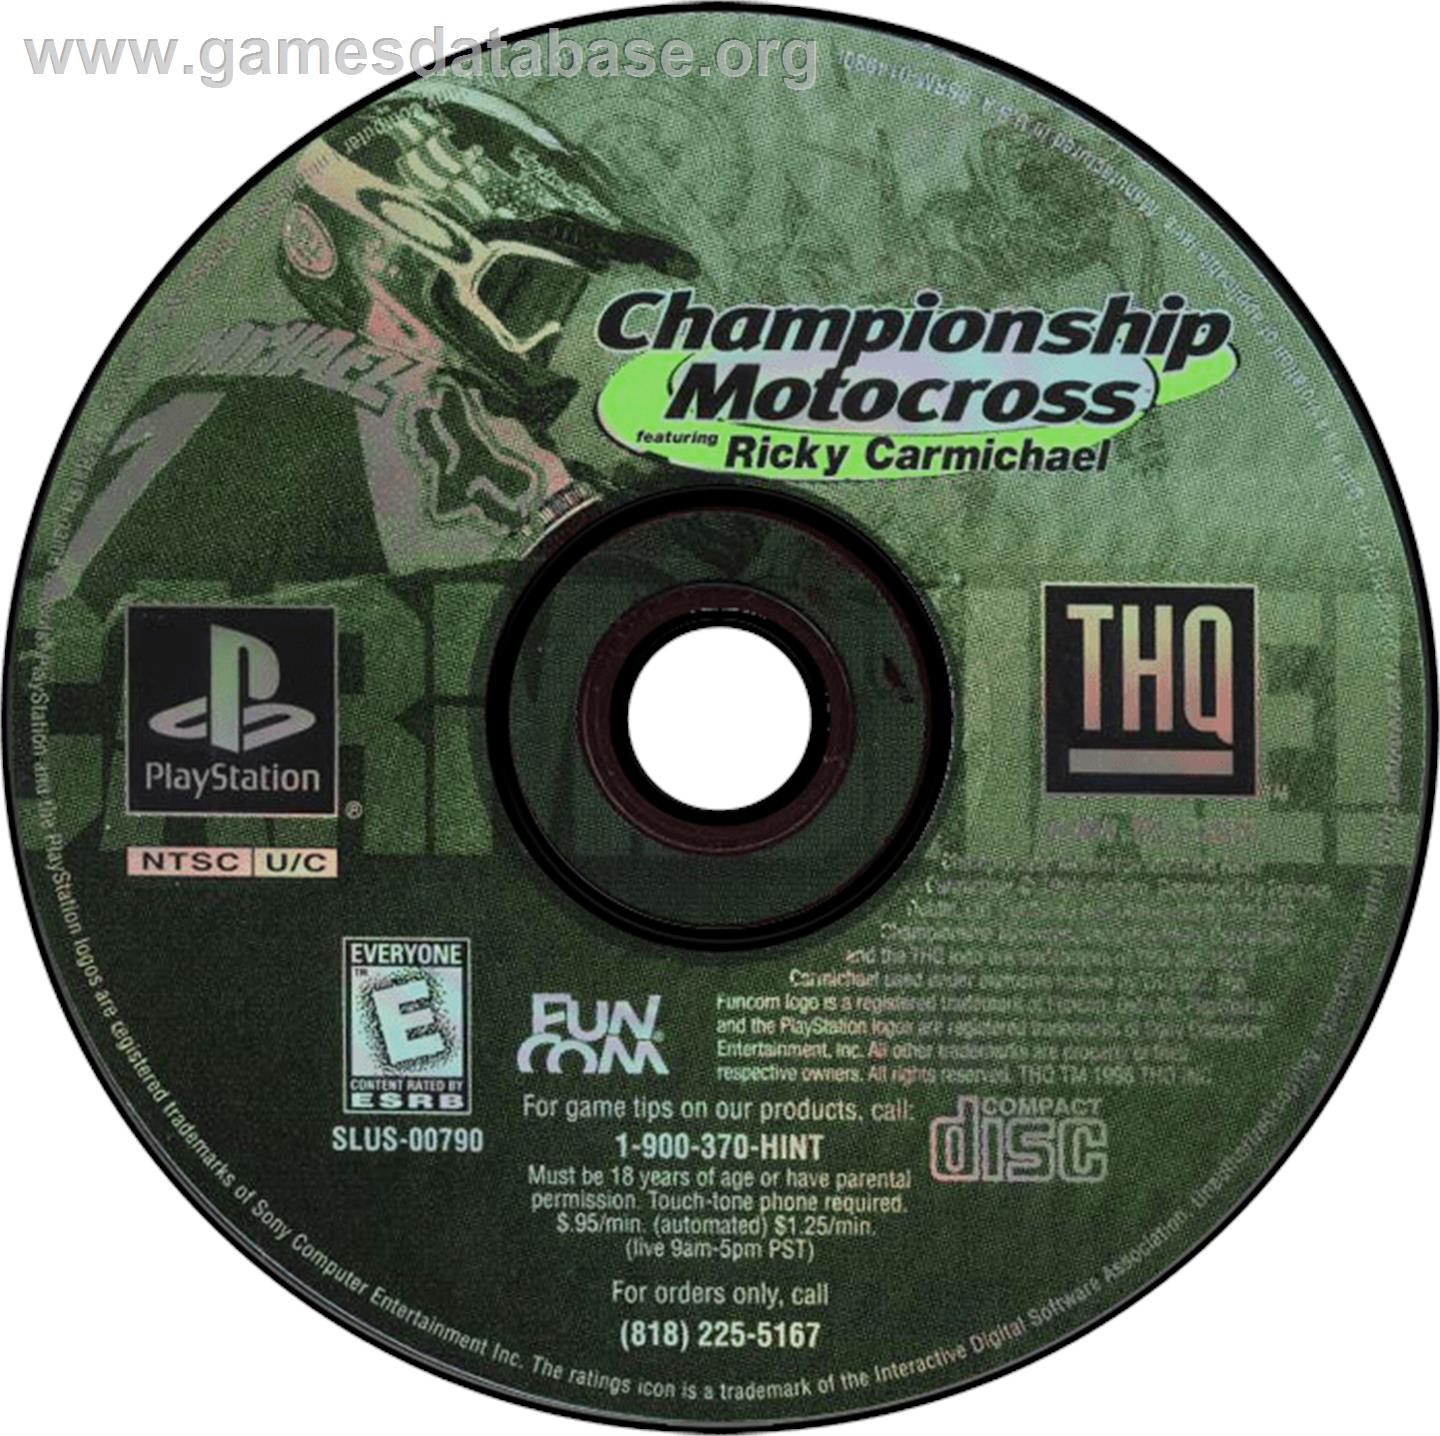 Championship Motocross Featuring Ricky Carmichael - Sony Playstation - Artwork - Disc